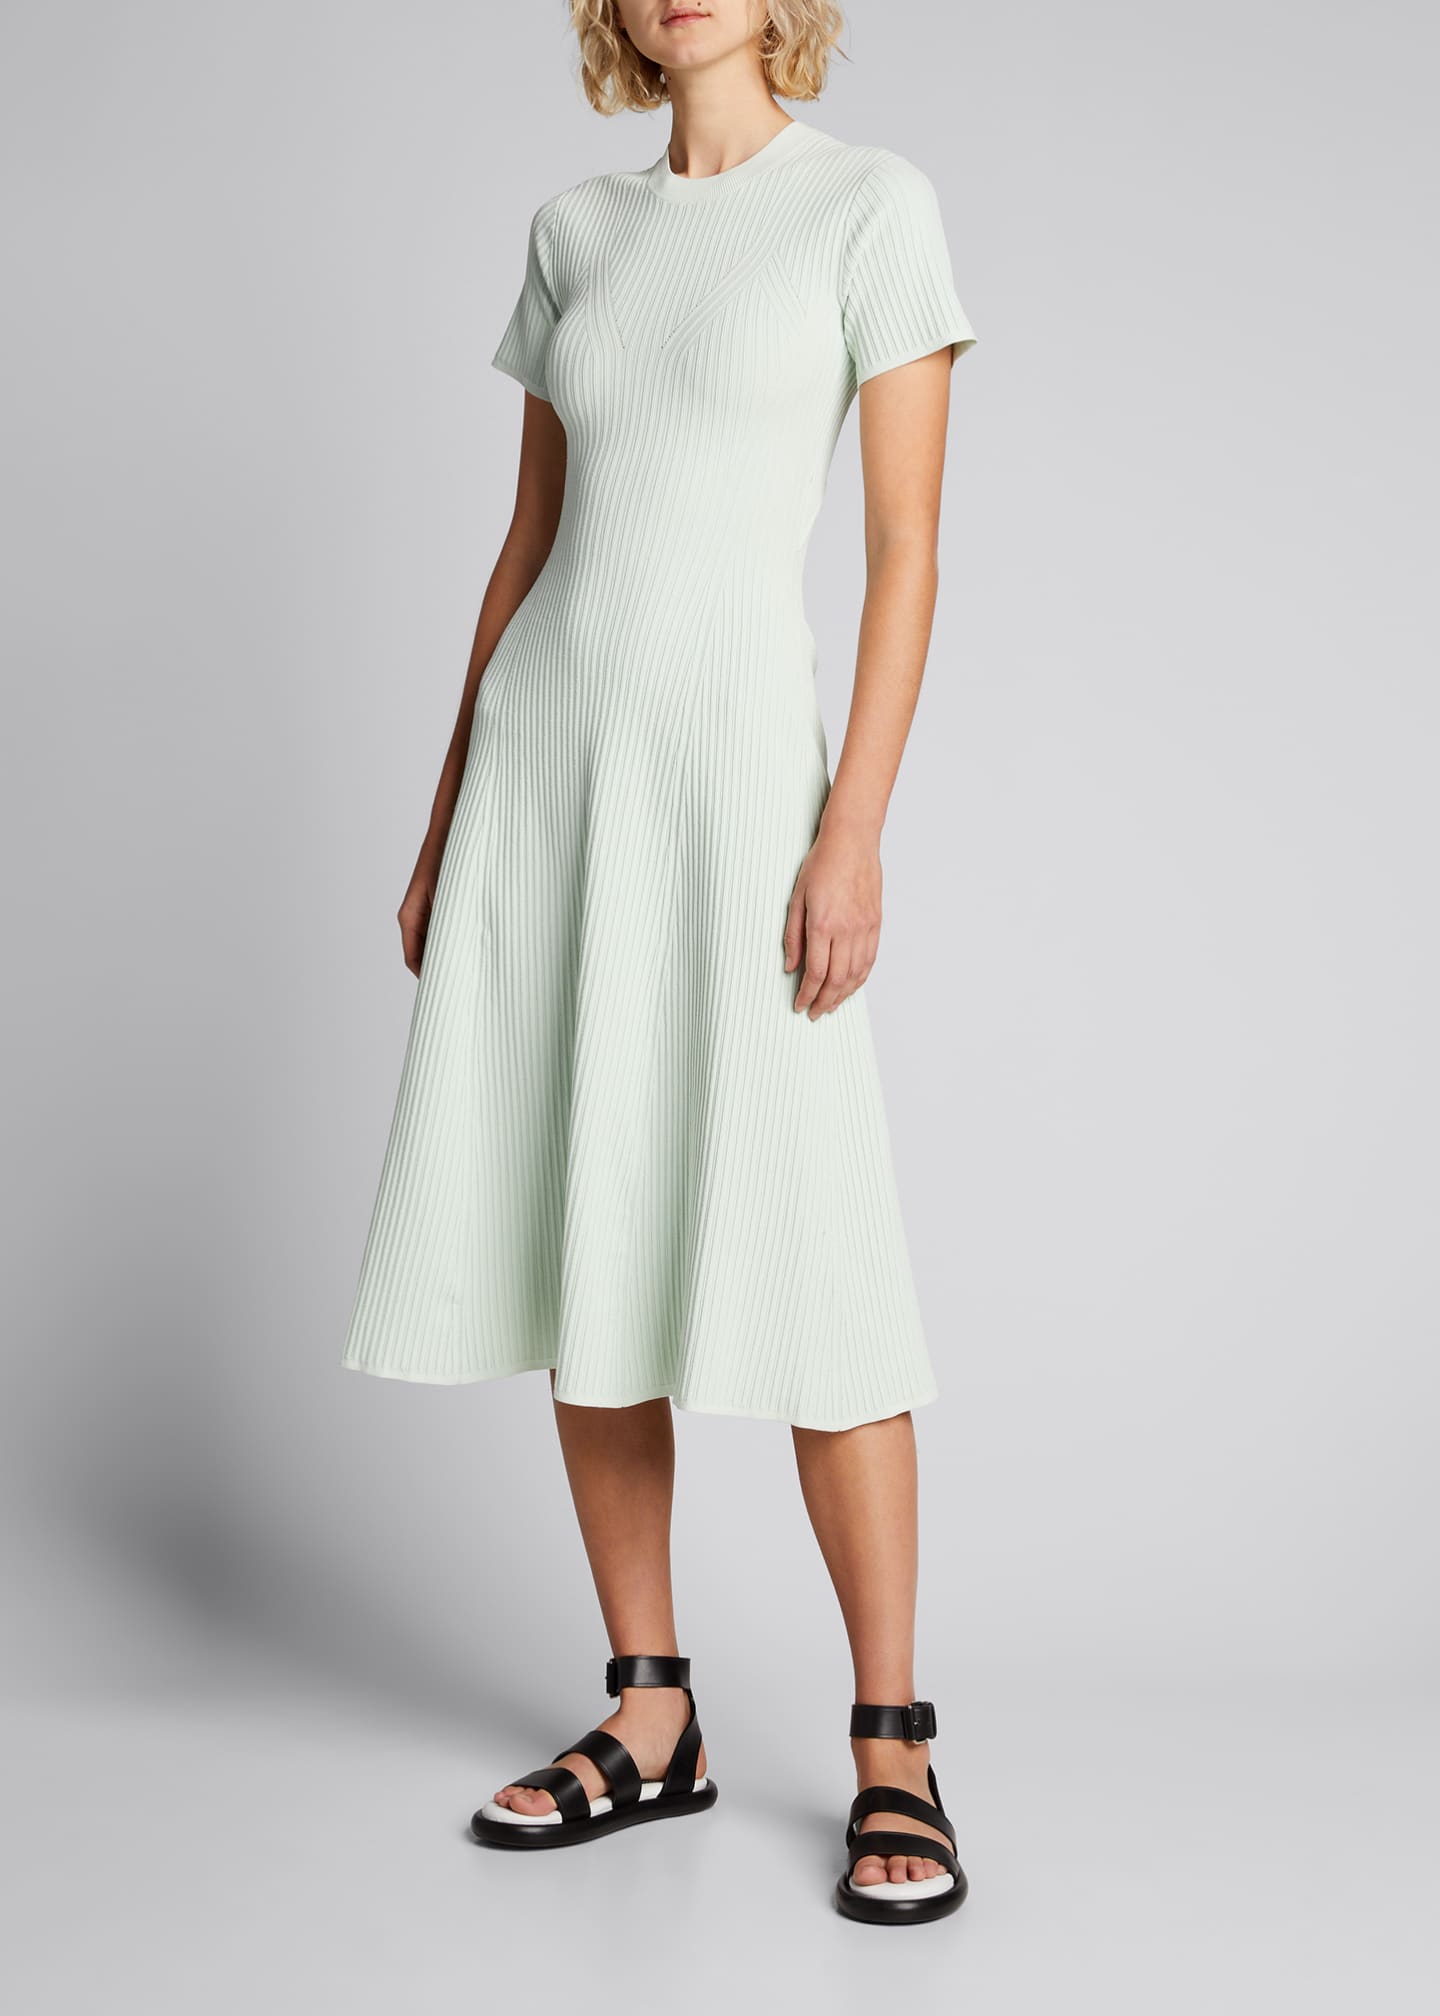 Proenza Schouler White Label Cutout-Back Knit Midi Dress - Bergdorf Goodman